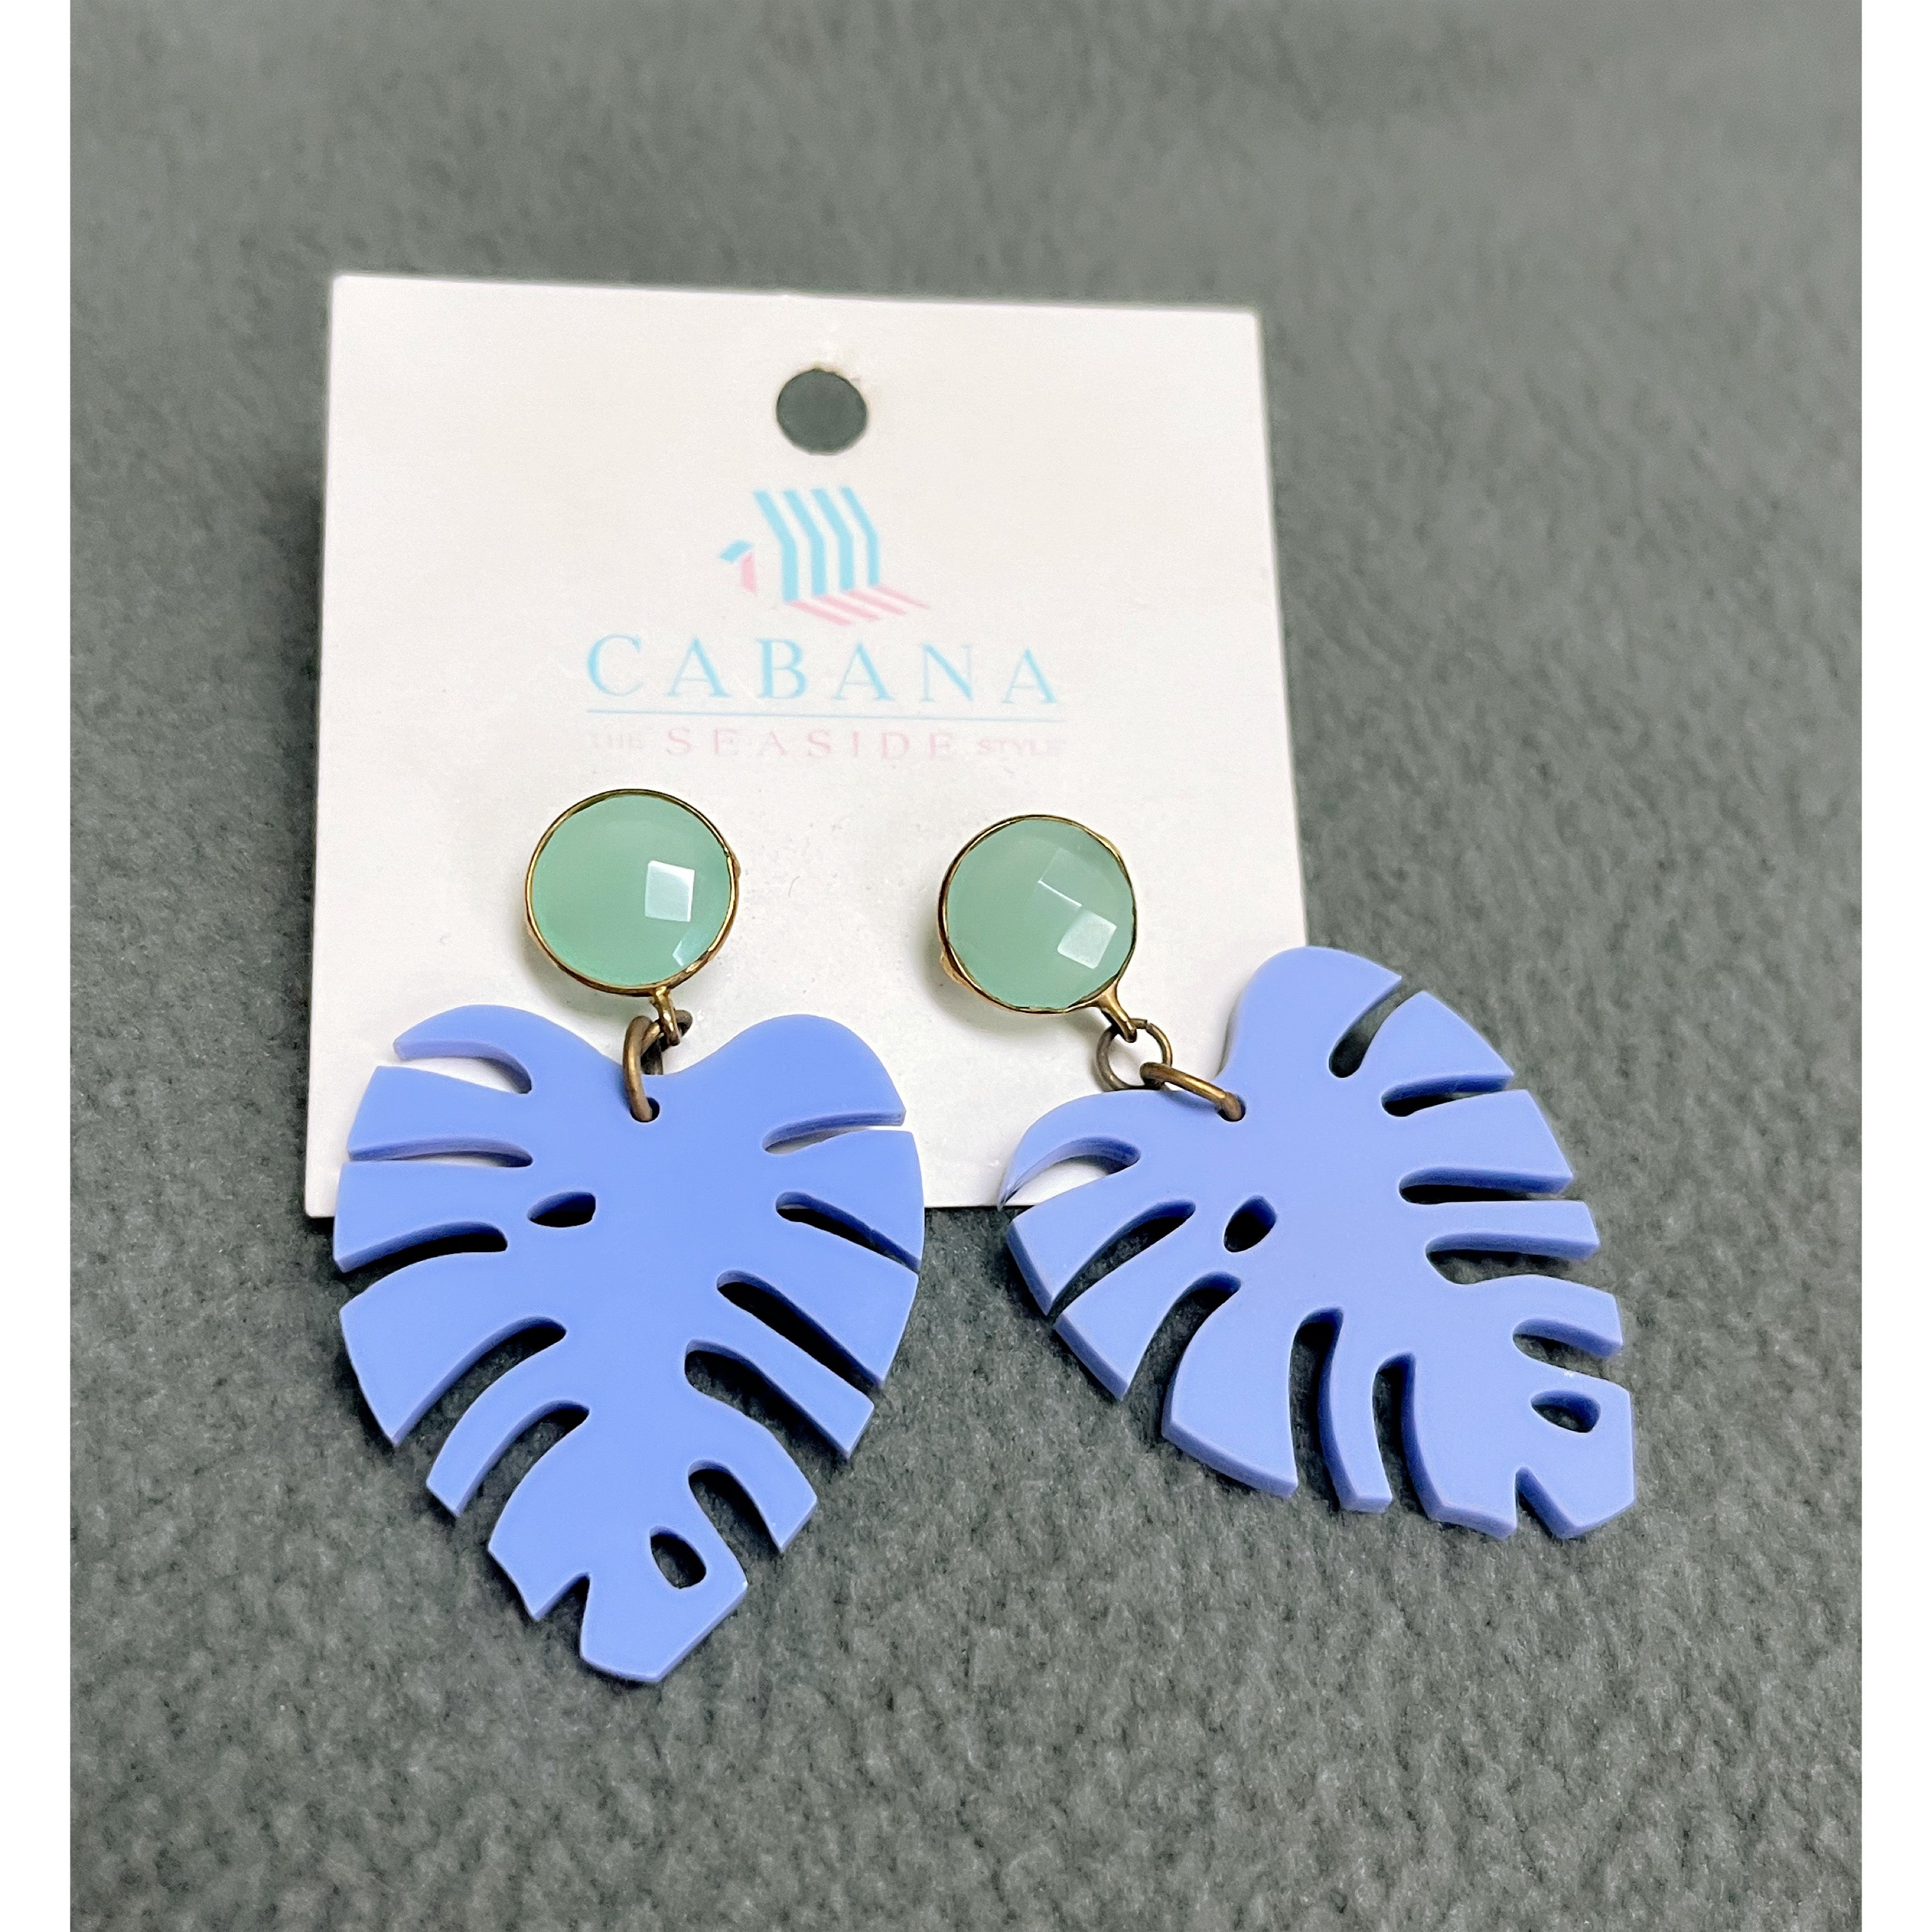 Cabana pale blue and aqua earrings, NEW!